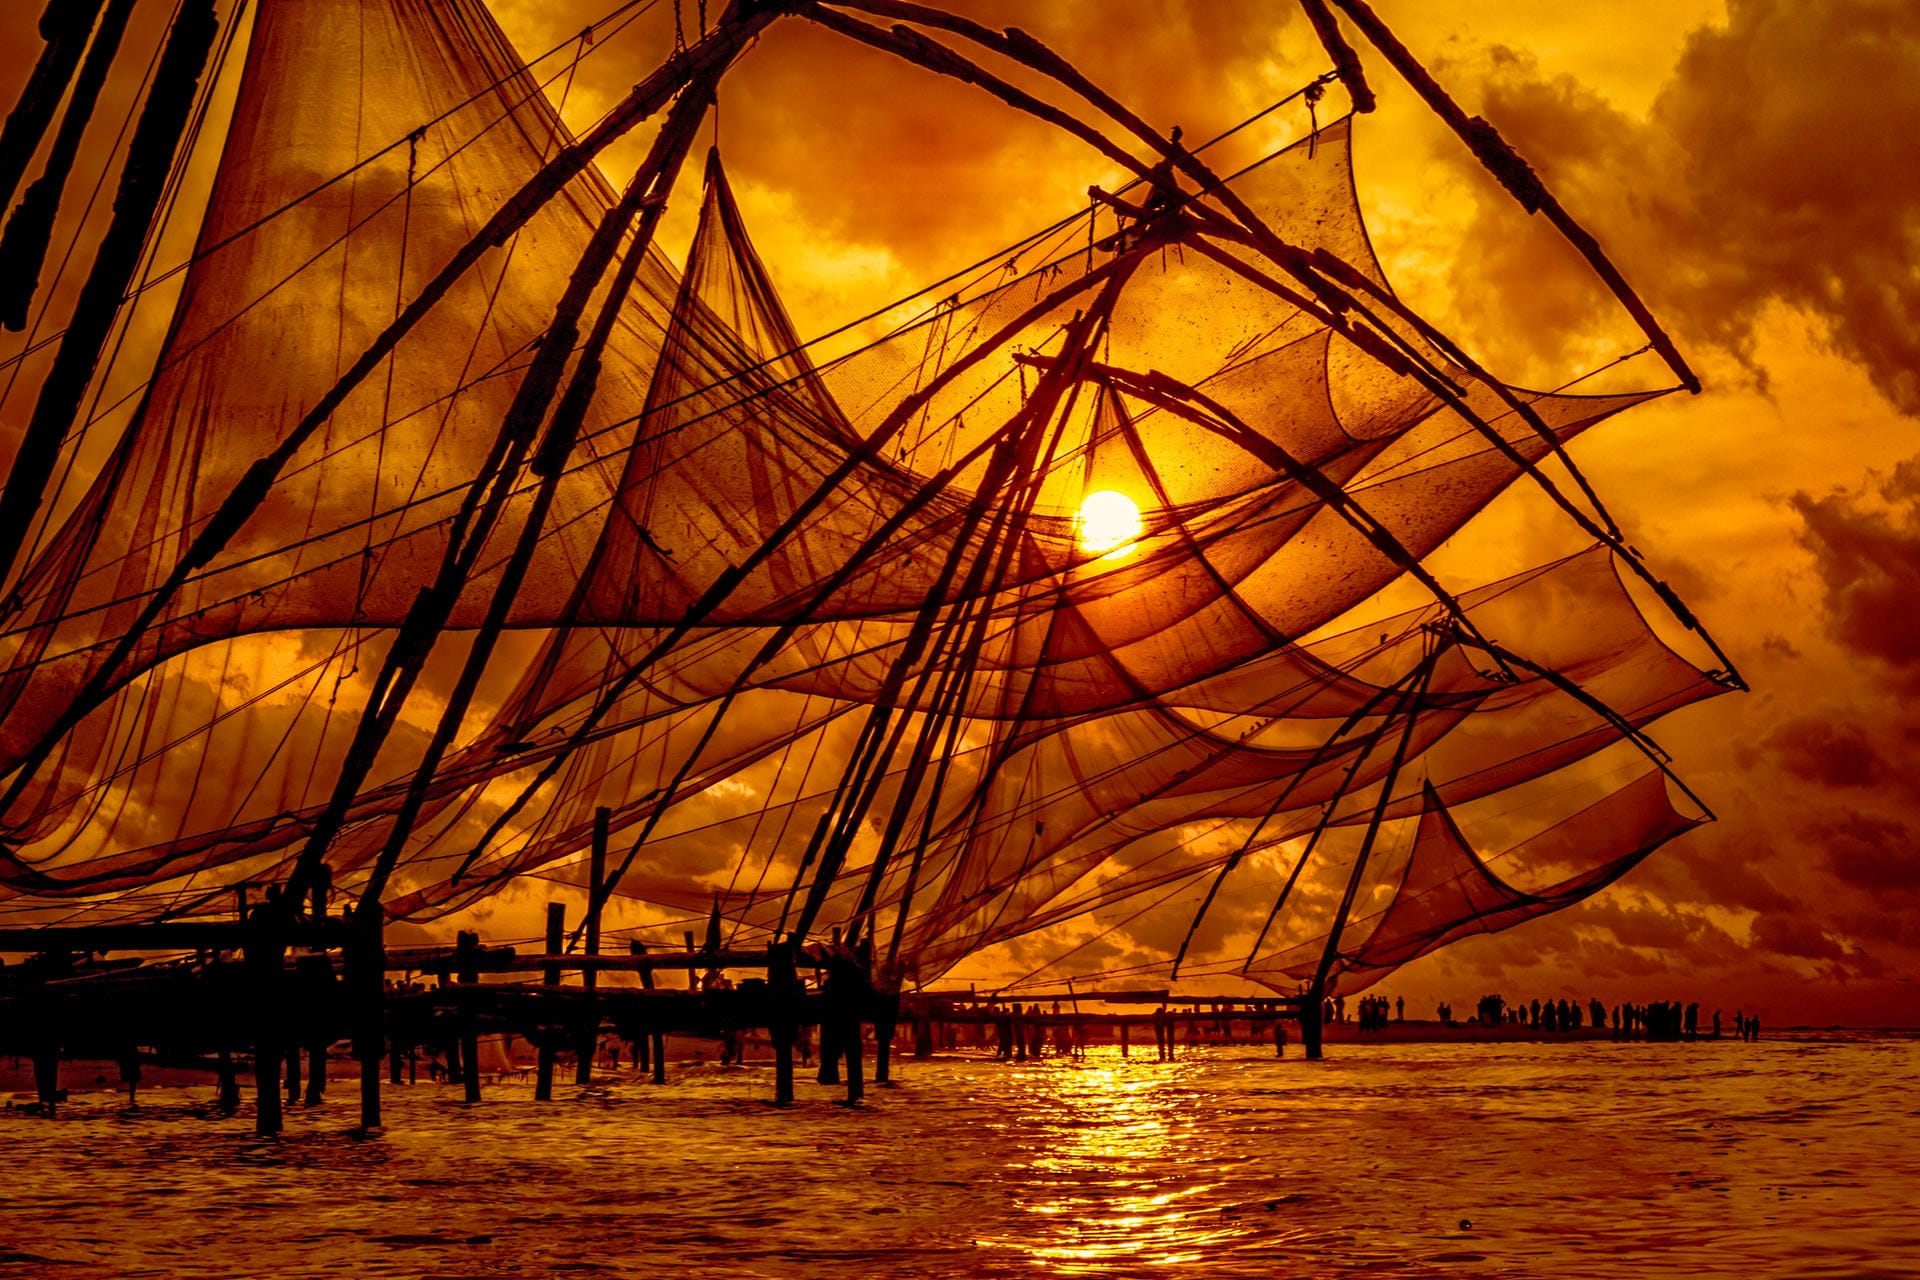 Chinese fishing net, Kochi, Kerala- India.